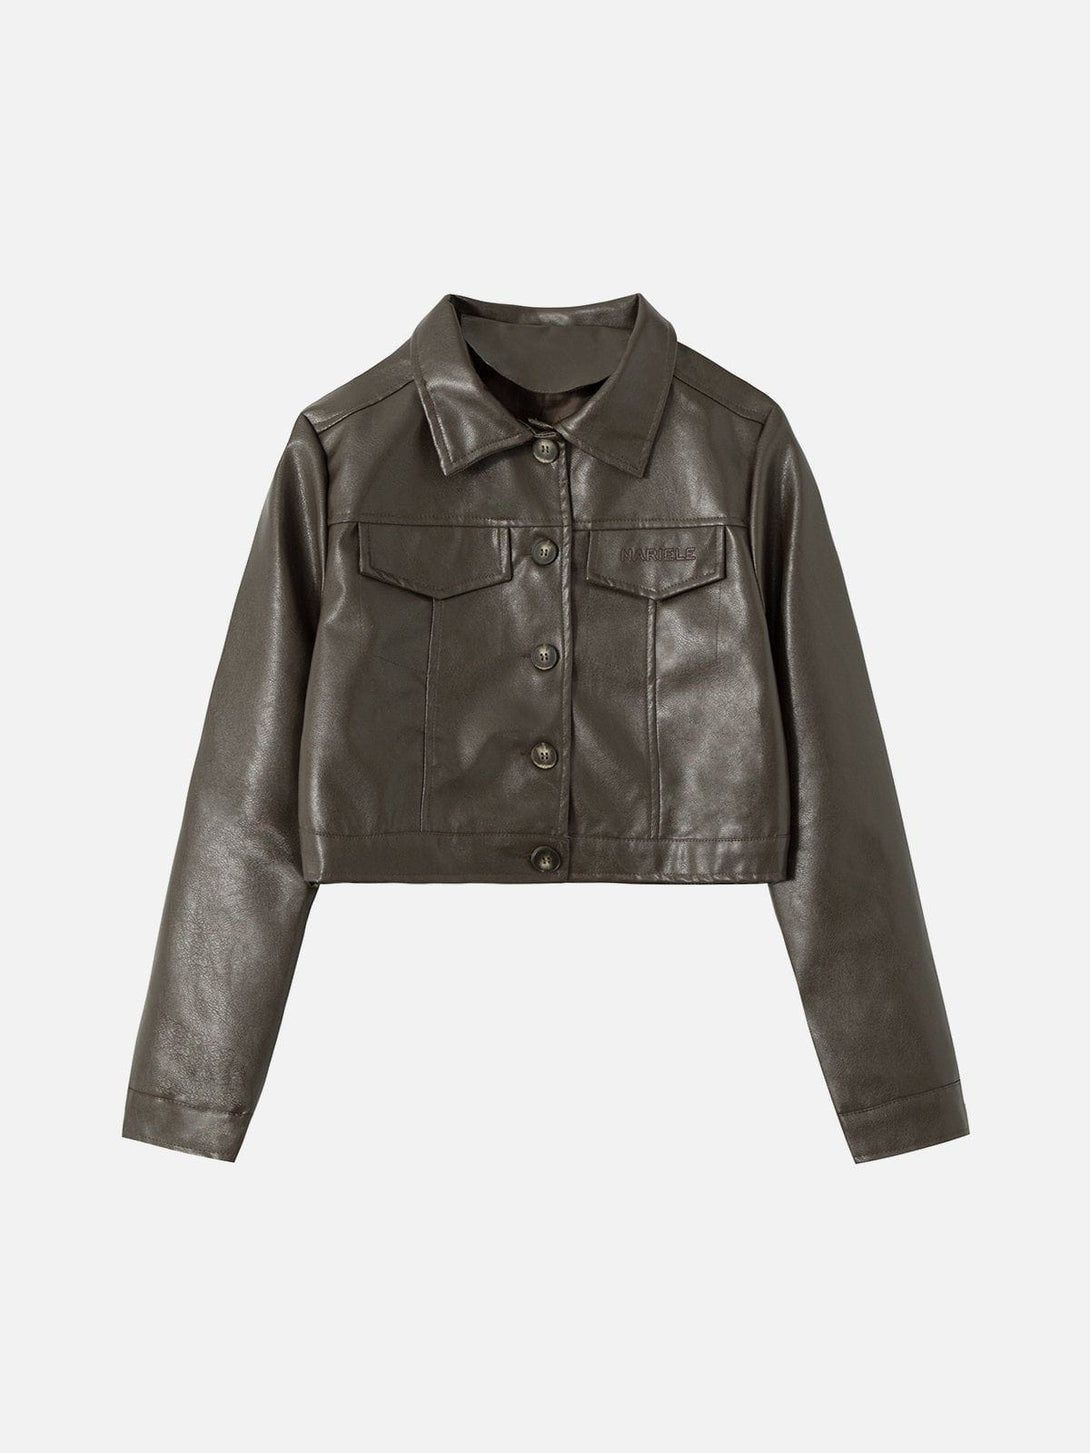 Majesda® - Patchwork Crop Pu Leather Jacket outfit ideas, streetwear fashion - majesda.com